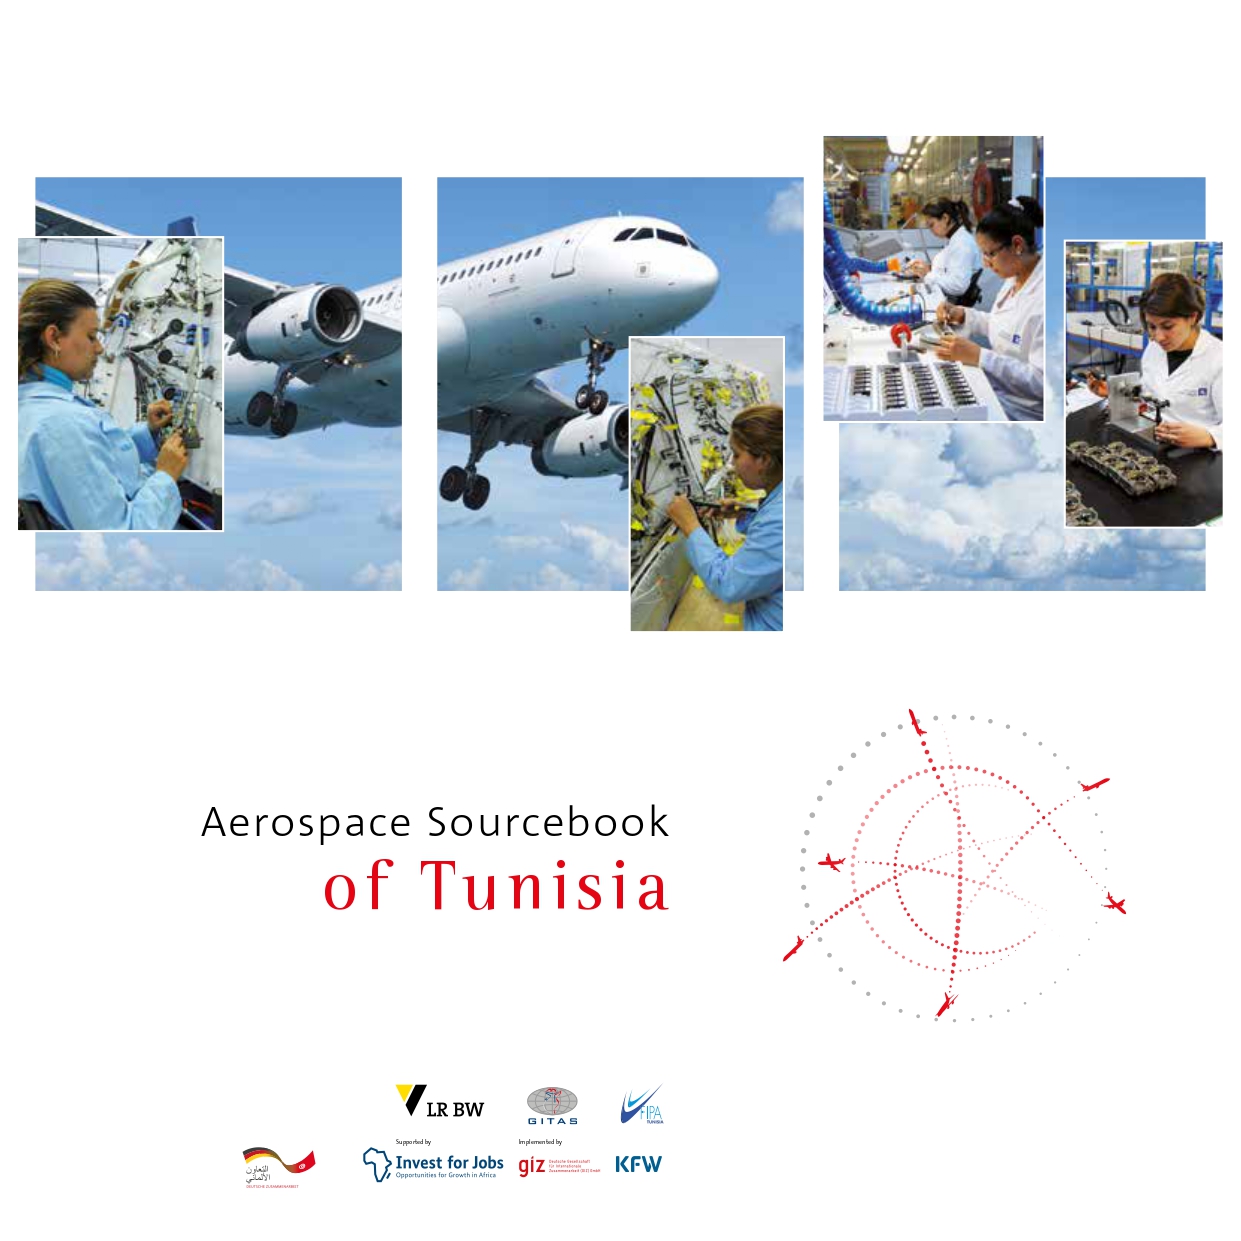   Aerospace Sourcebook of Tunisia